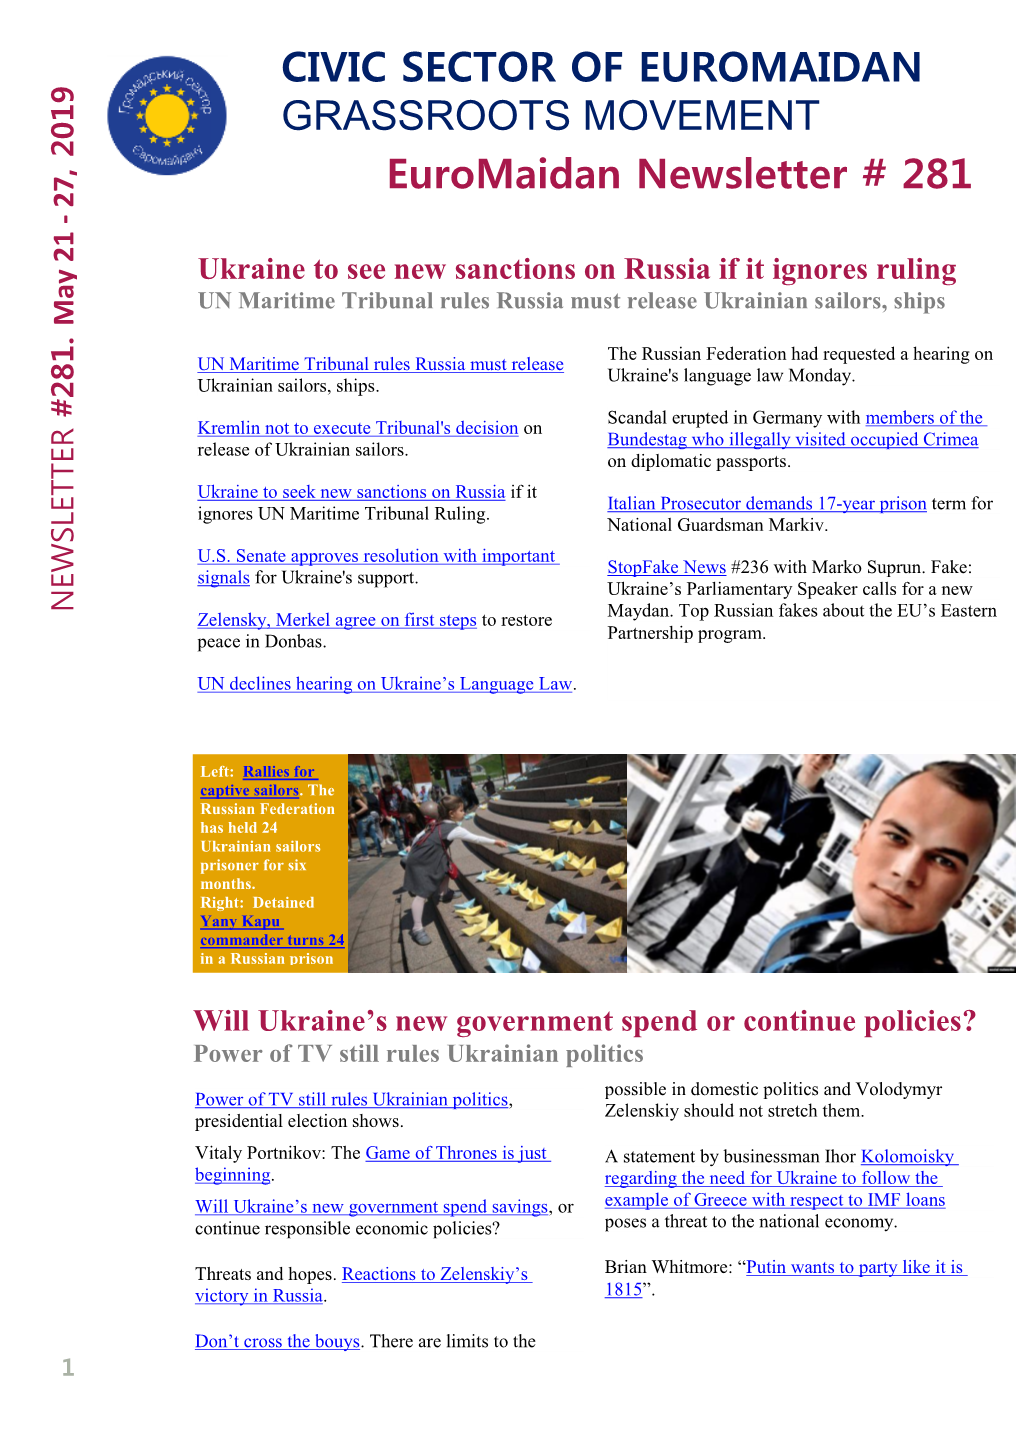 Euromaidan Newsletter # 281 CIVIC SECTOR of EUROMAIDAN GRASSROOTS MOVEMENT